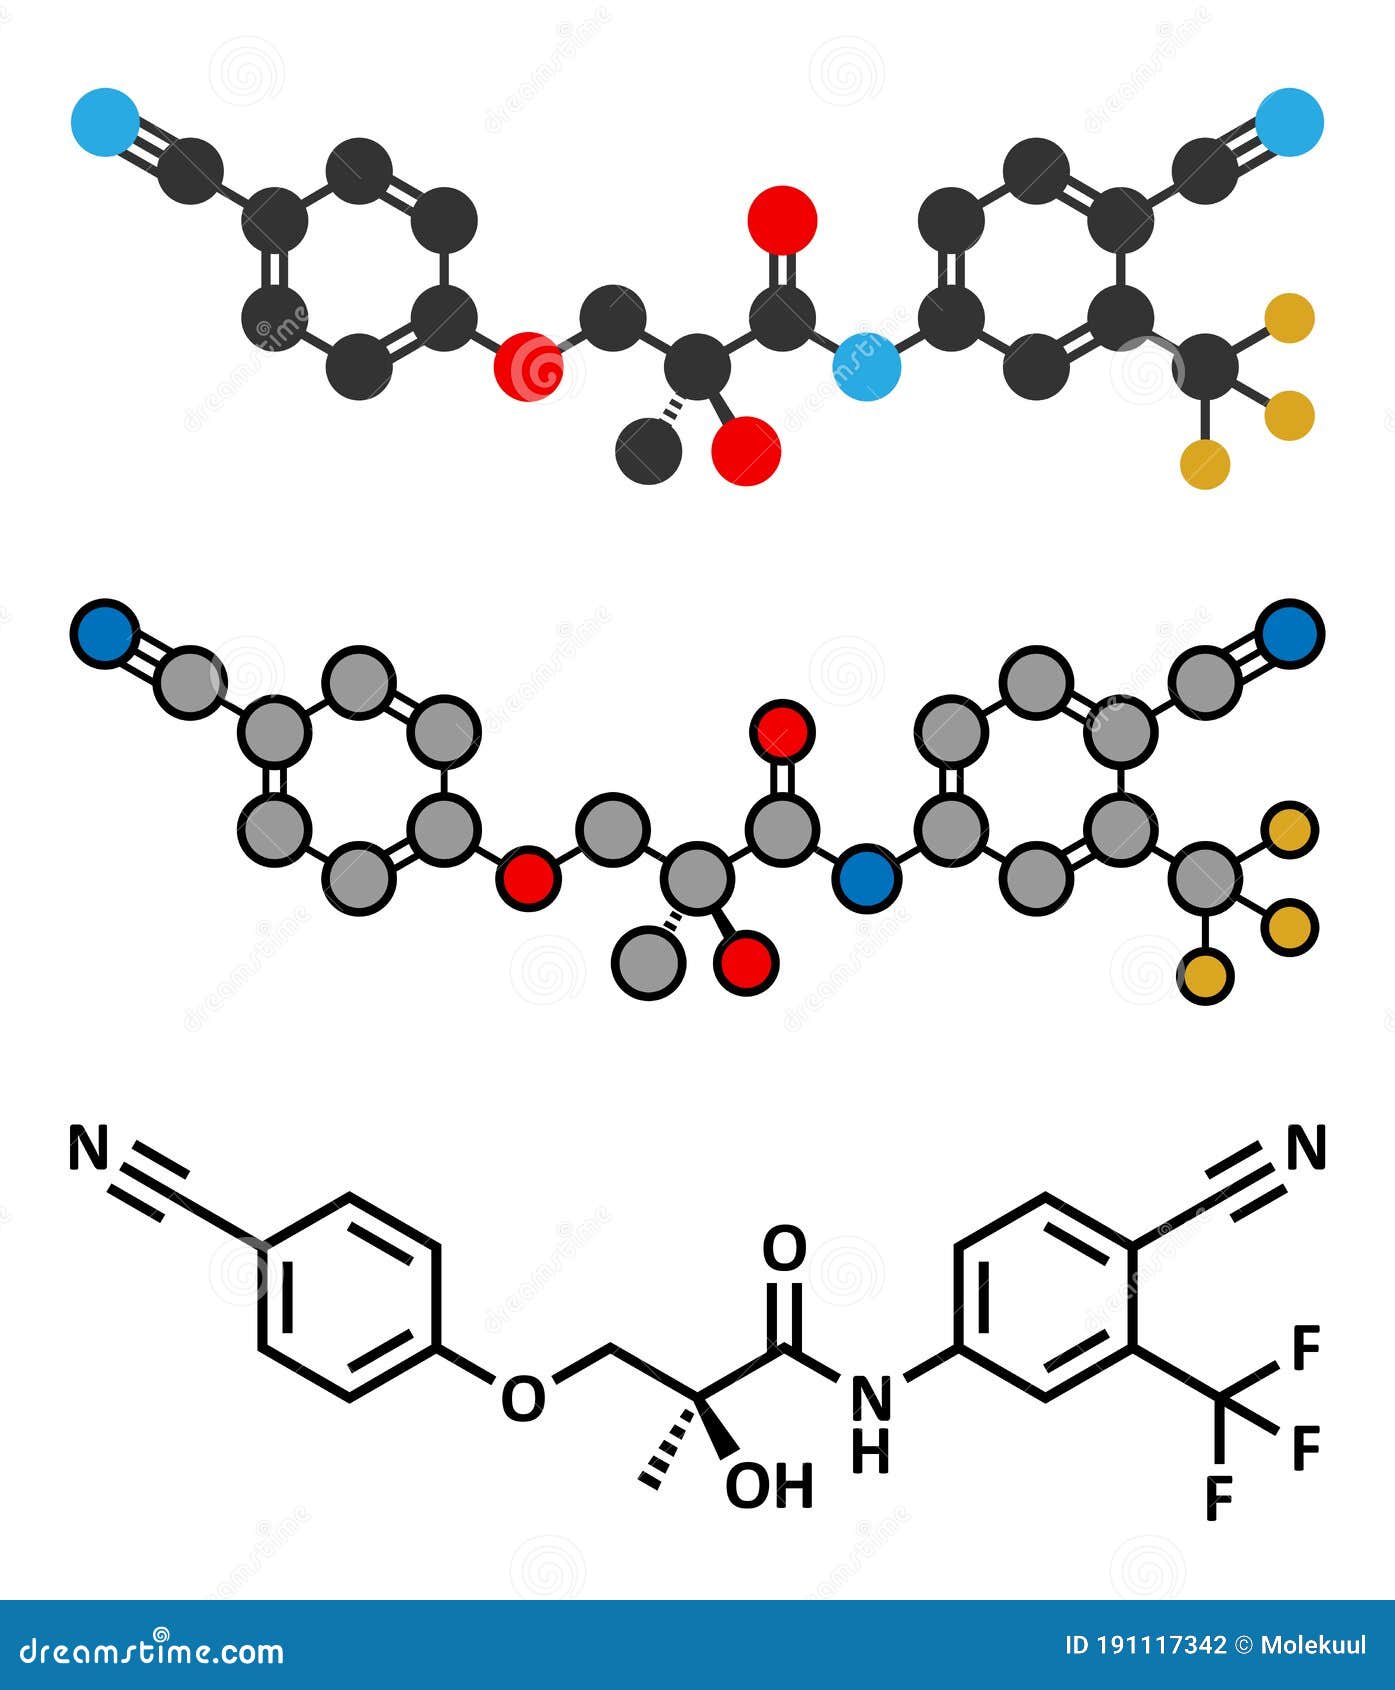 enobosarm drug molecule. stylized 2d renderings and conventional skeletal formula. selective androgen receptor modulator (sarm)